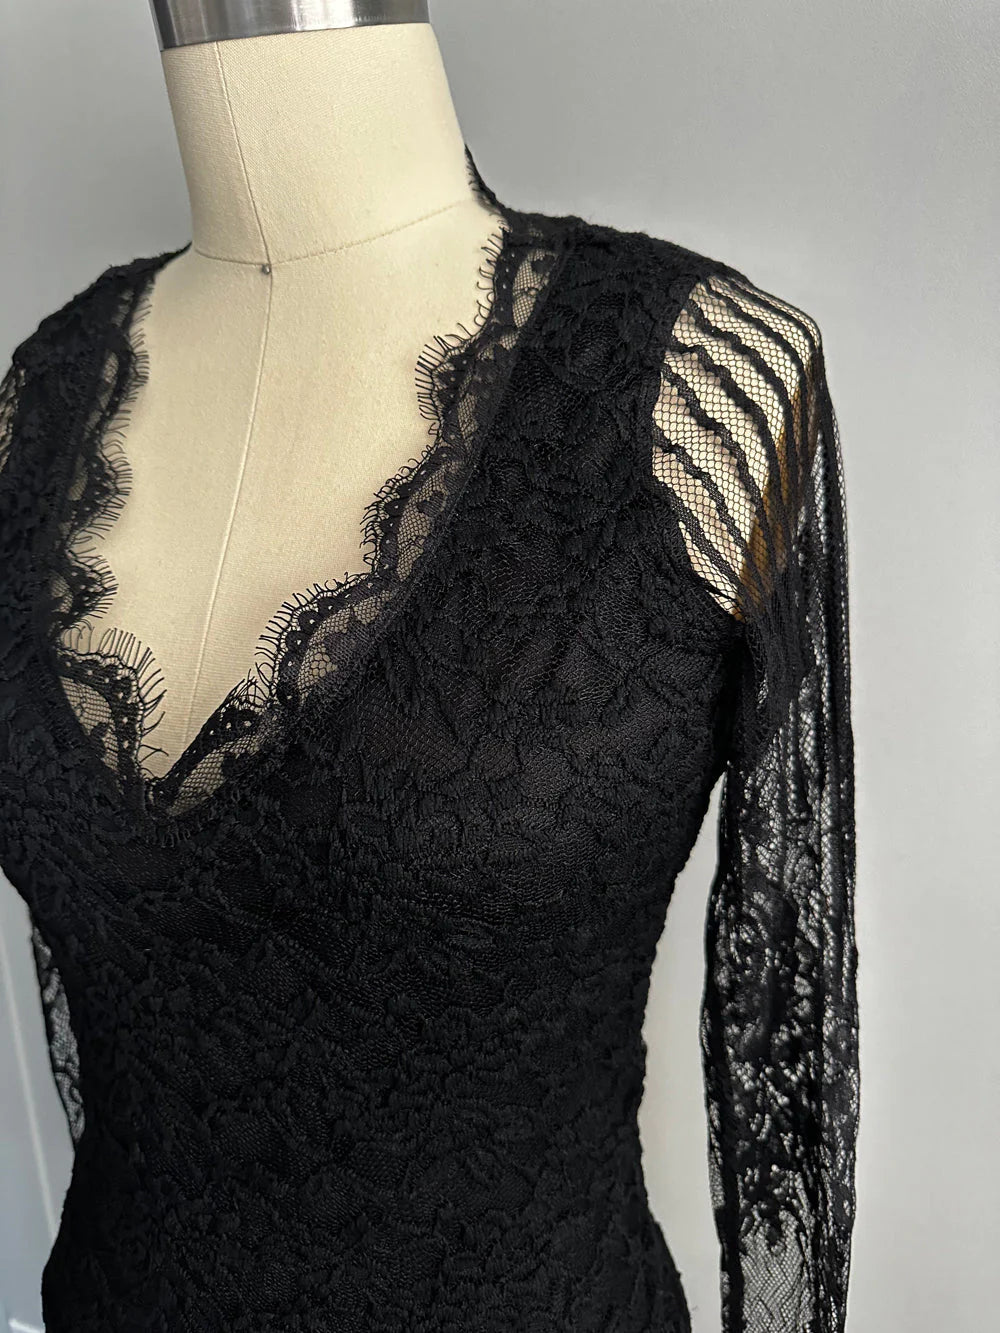 Black Victorian Lace Top